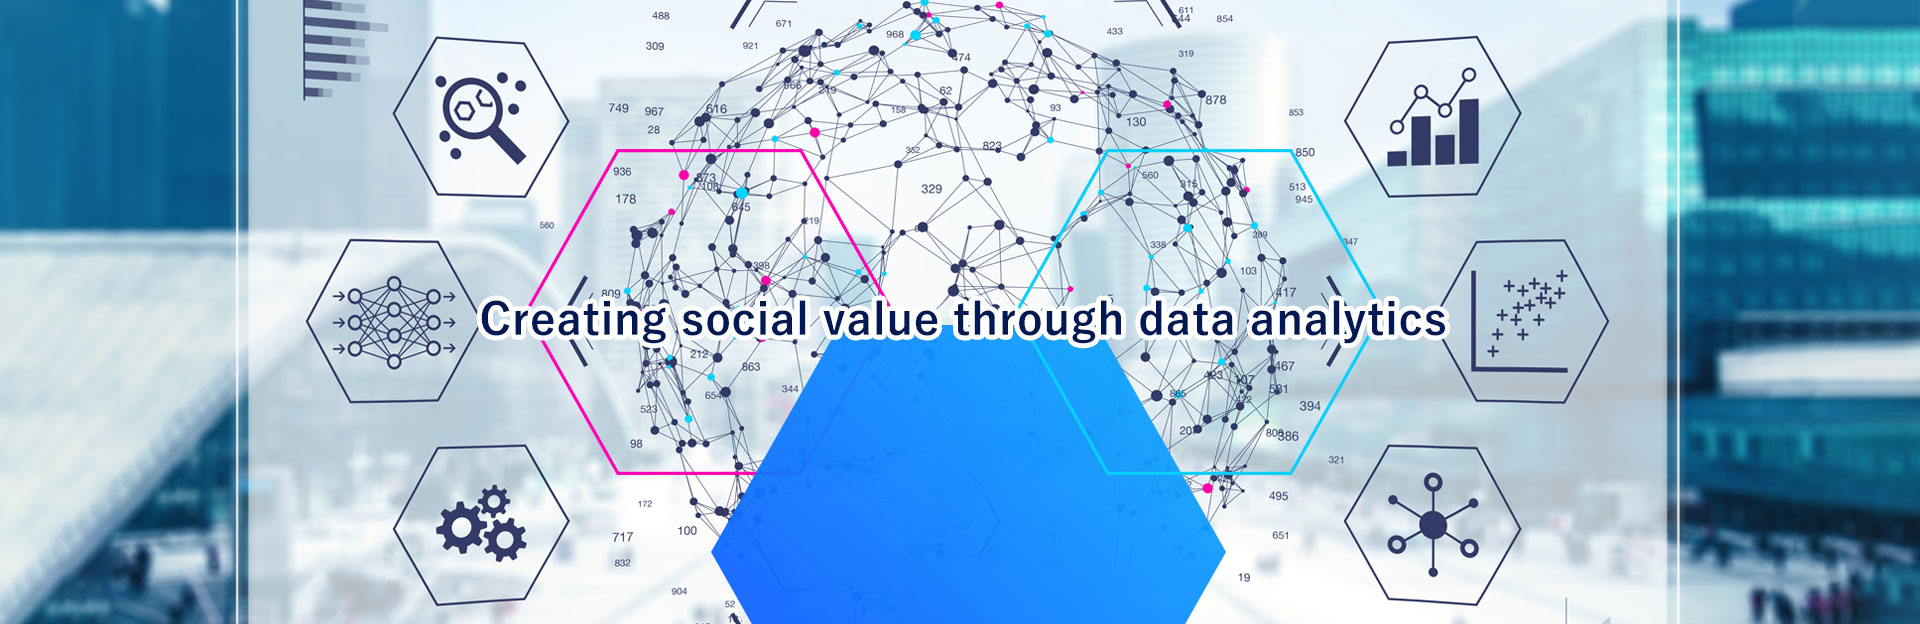 Creating social value through data analytics